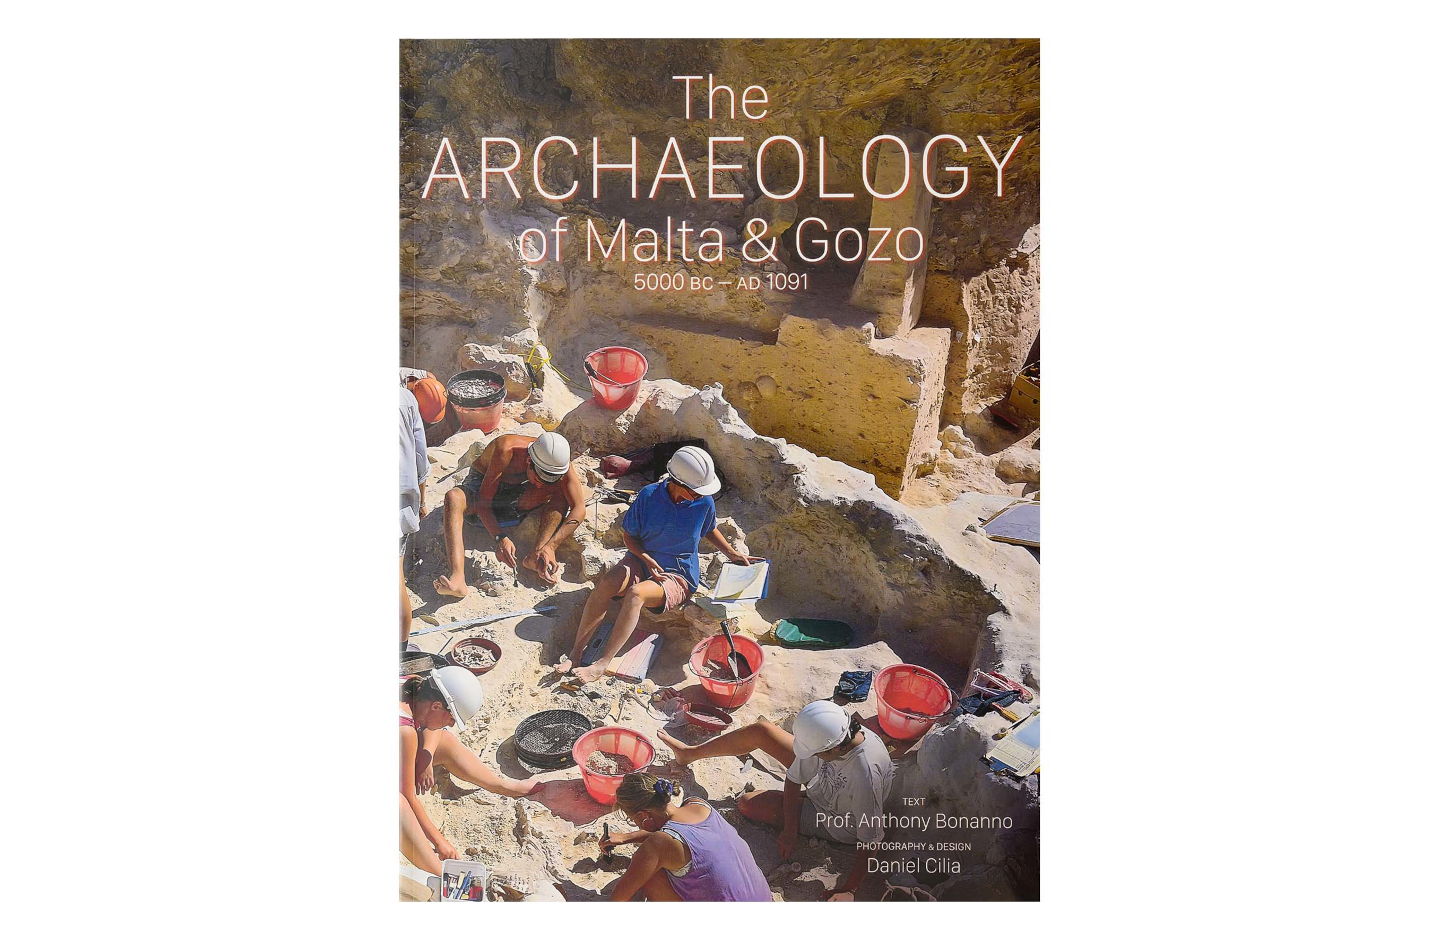 The Archaeology of Malta & Gozo: 5000 BC – AD 1091